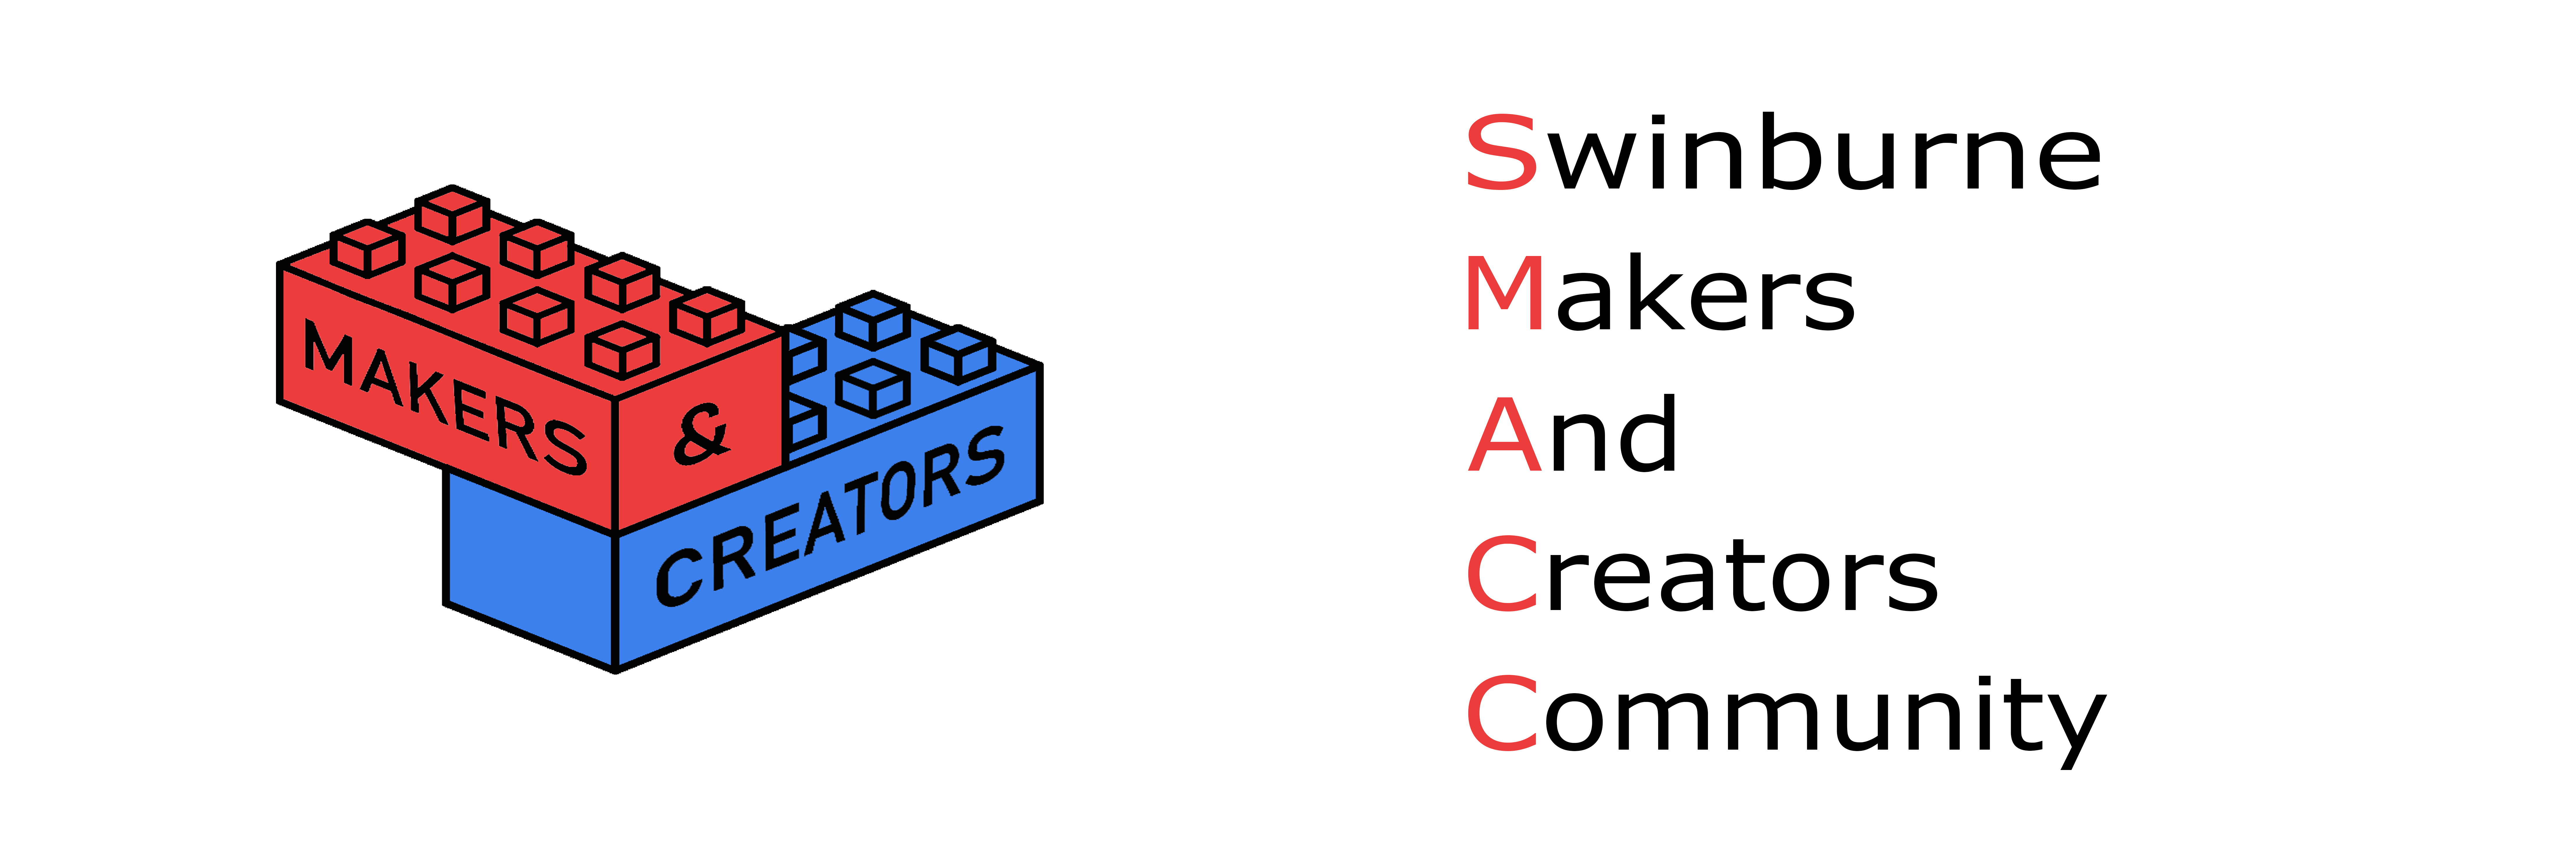 Swinburne makers and creators